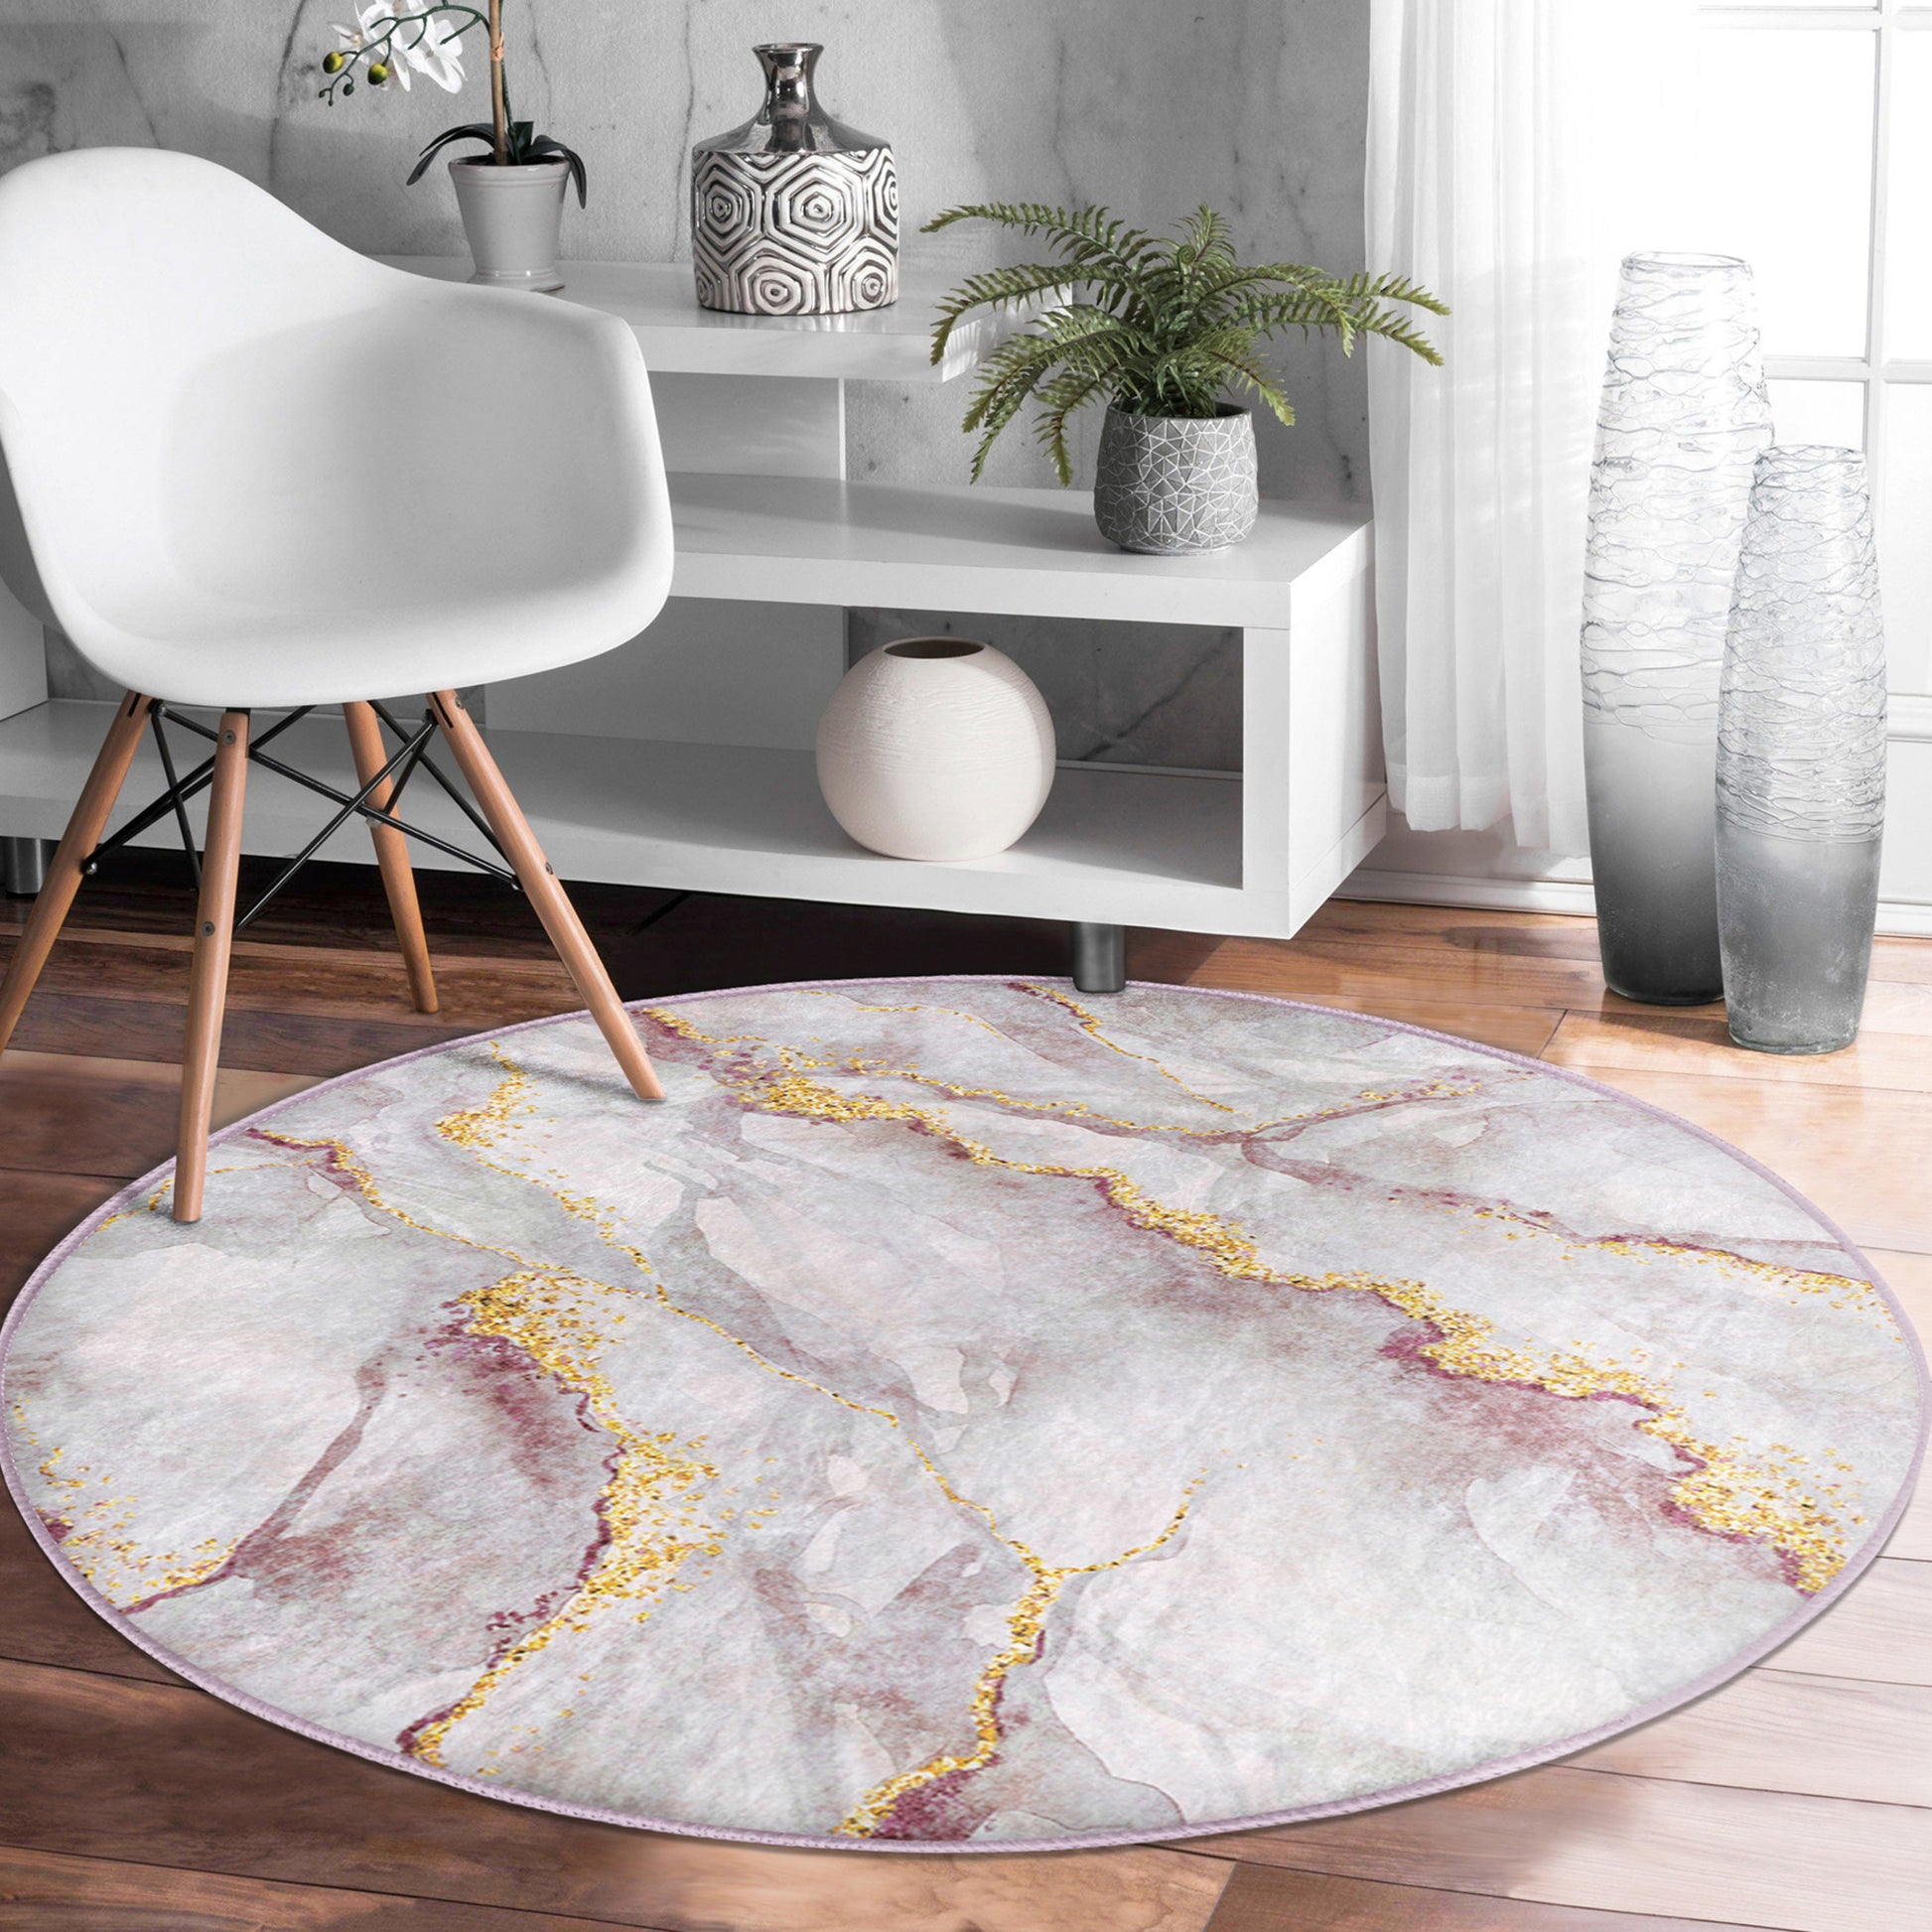 Sophisticated White Marble Living Room Rug - Modern Design